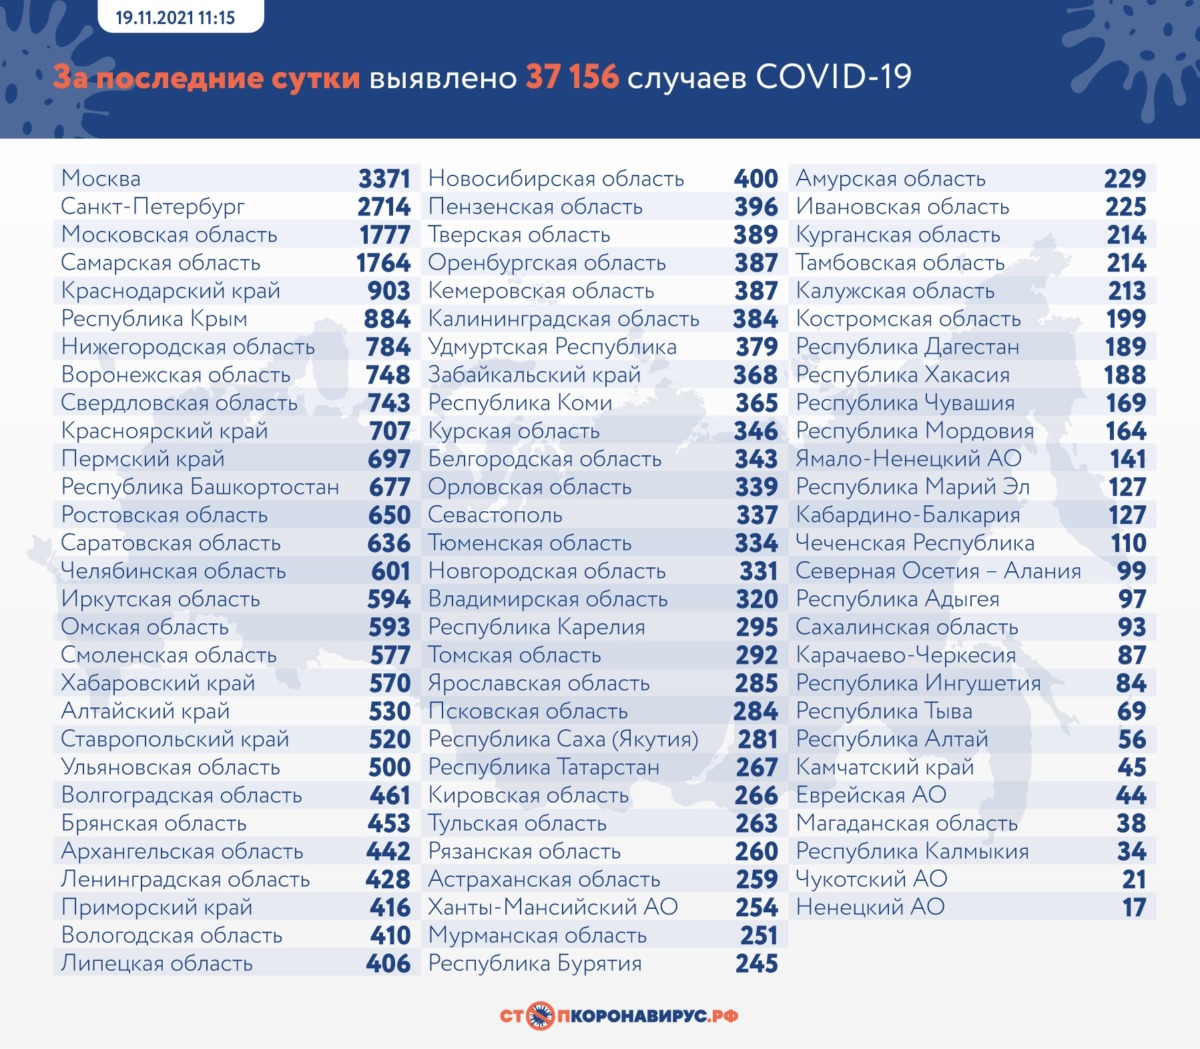 Оперативная статистика в России по коронавирусу на 19 ноября